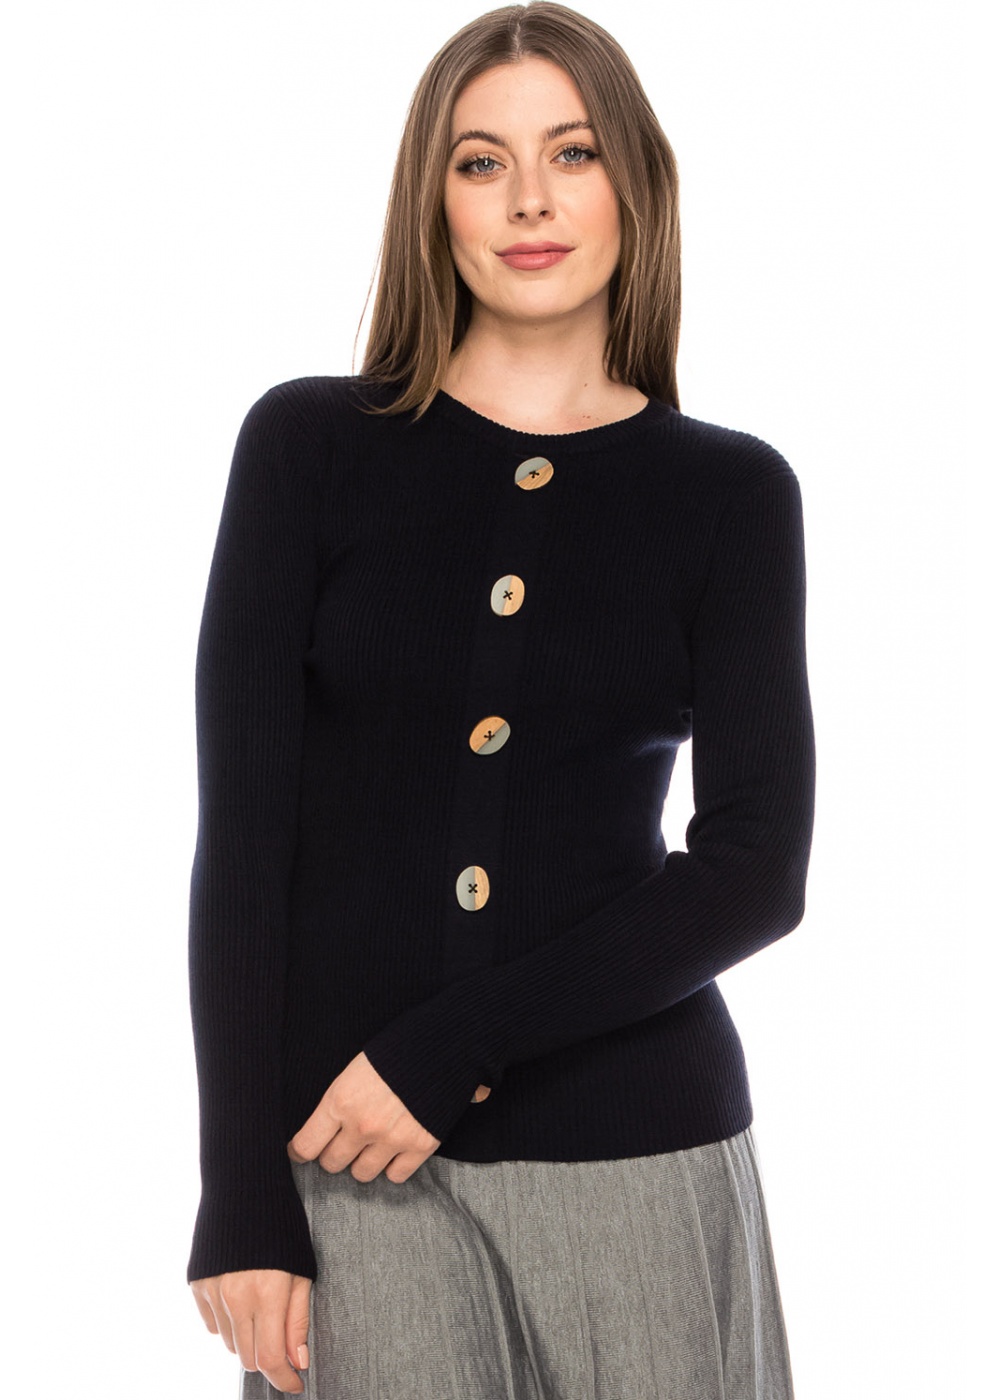 Wooden Button Sweater - navy